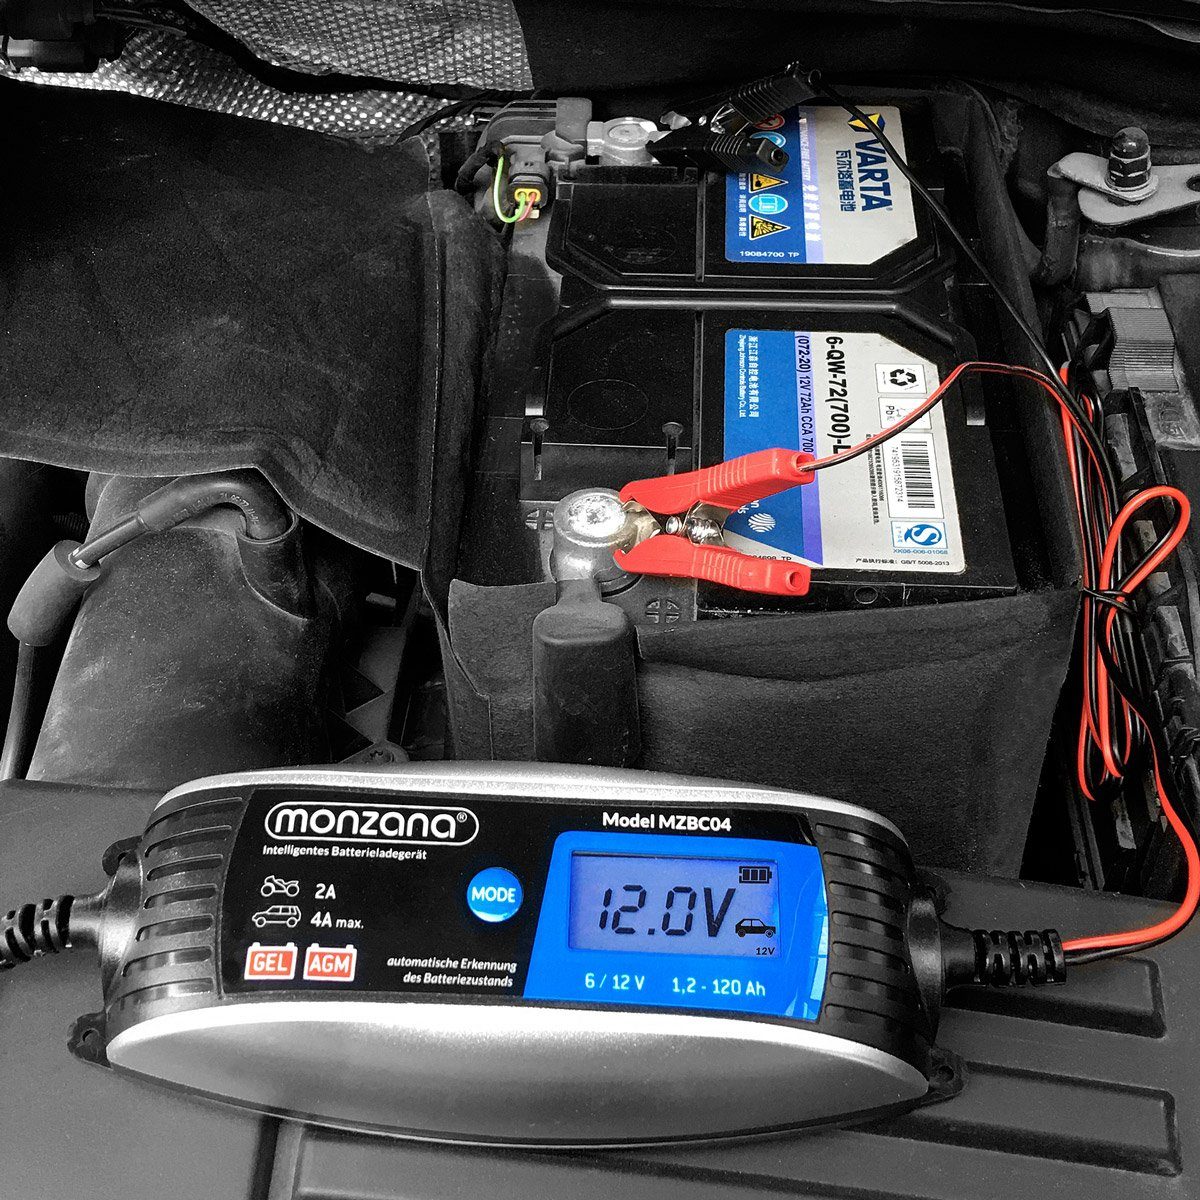 EUFAB Intelligentes Batterie- ladegerät 6V/12V Angebot bei Norma